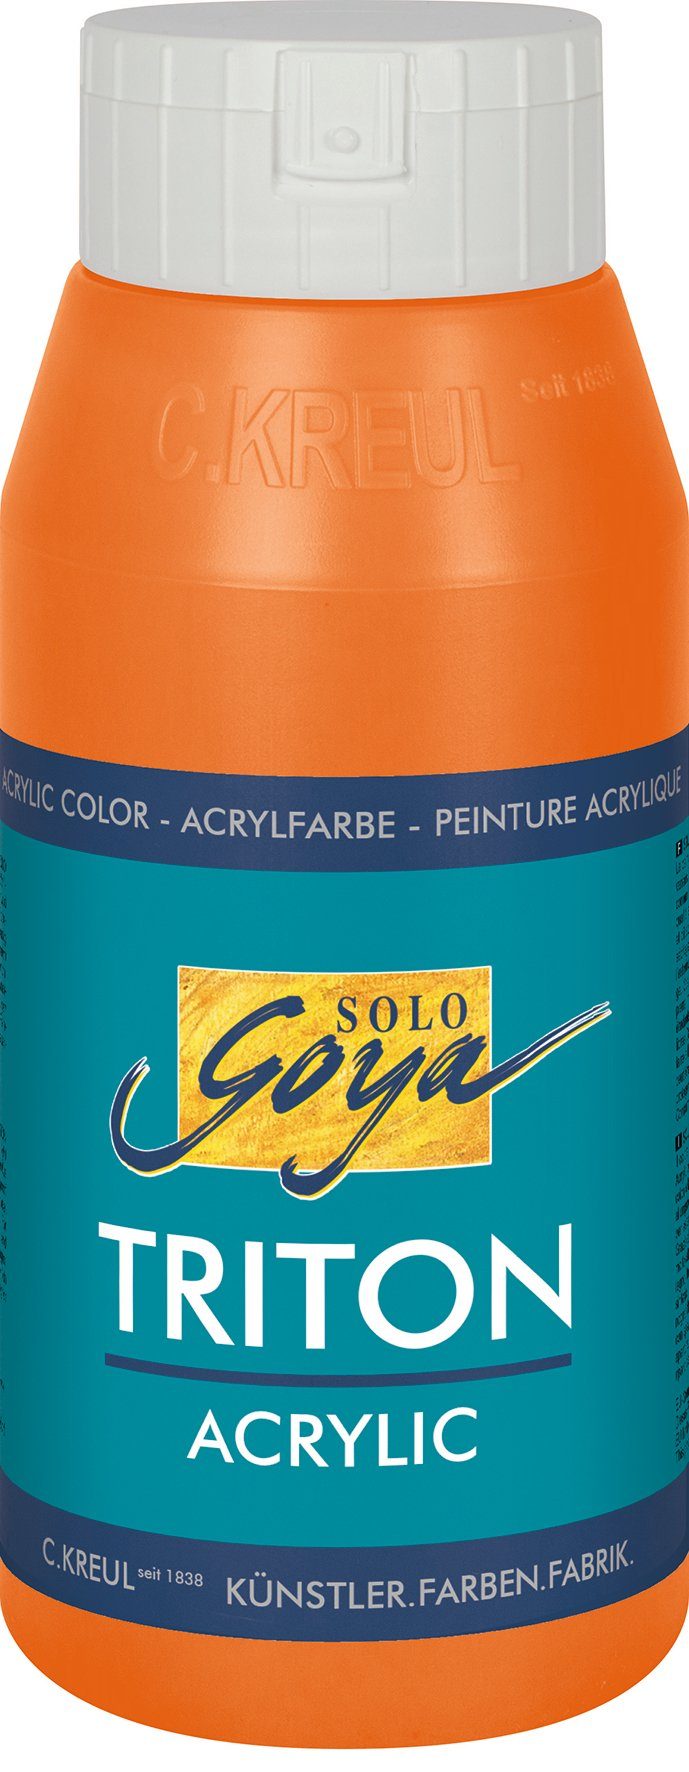 Kreul Acrylfarbe Solo Goya Triton Acrylic, 750 ml Aprikose